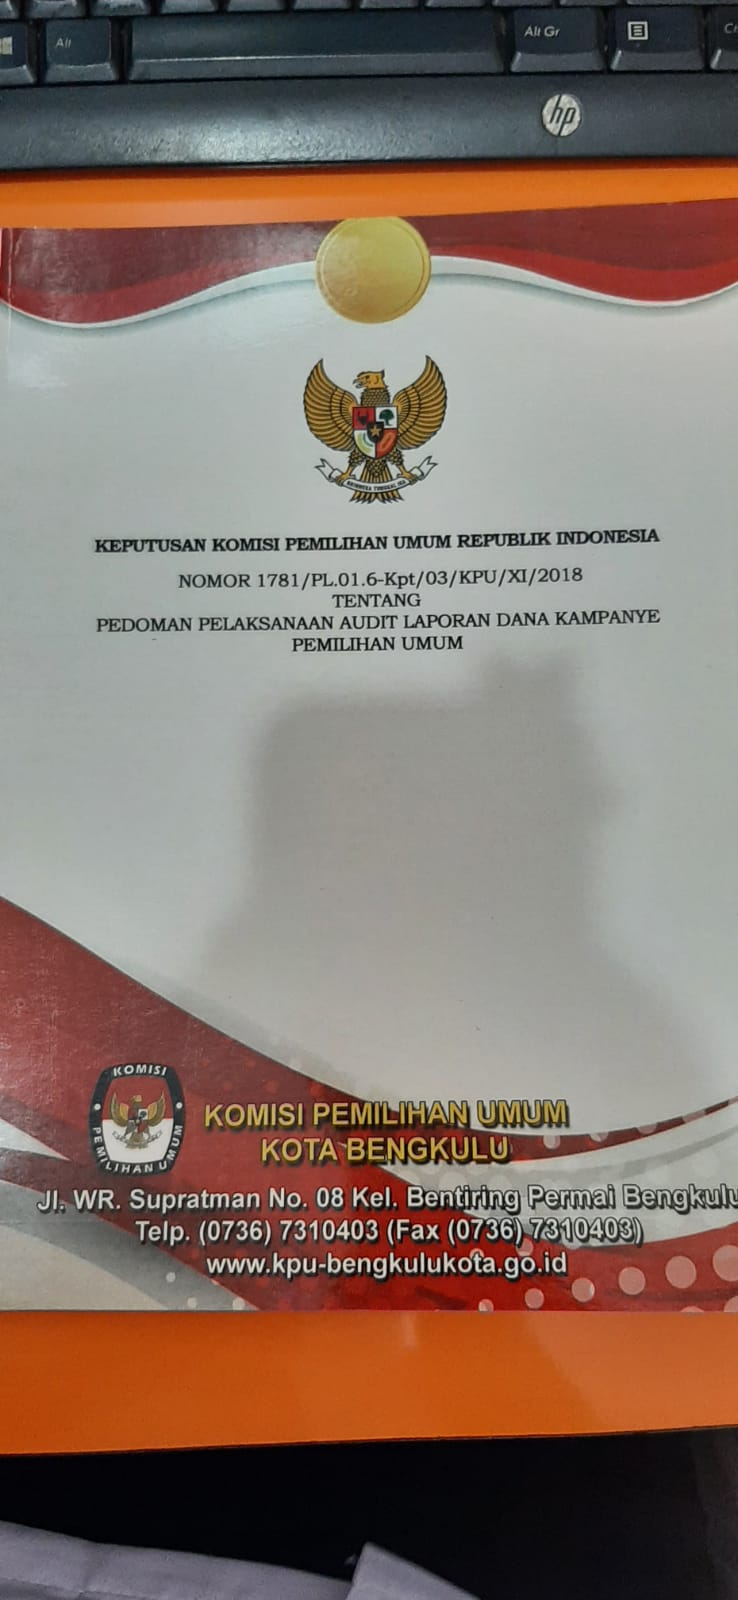 KEPUTUSAN KOMISI PEMILIHAN UMUM REPUBLIK INDONESIA NOMOR 1781/PL.01.6-Kpt/03/KPU/XI/2018 